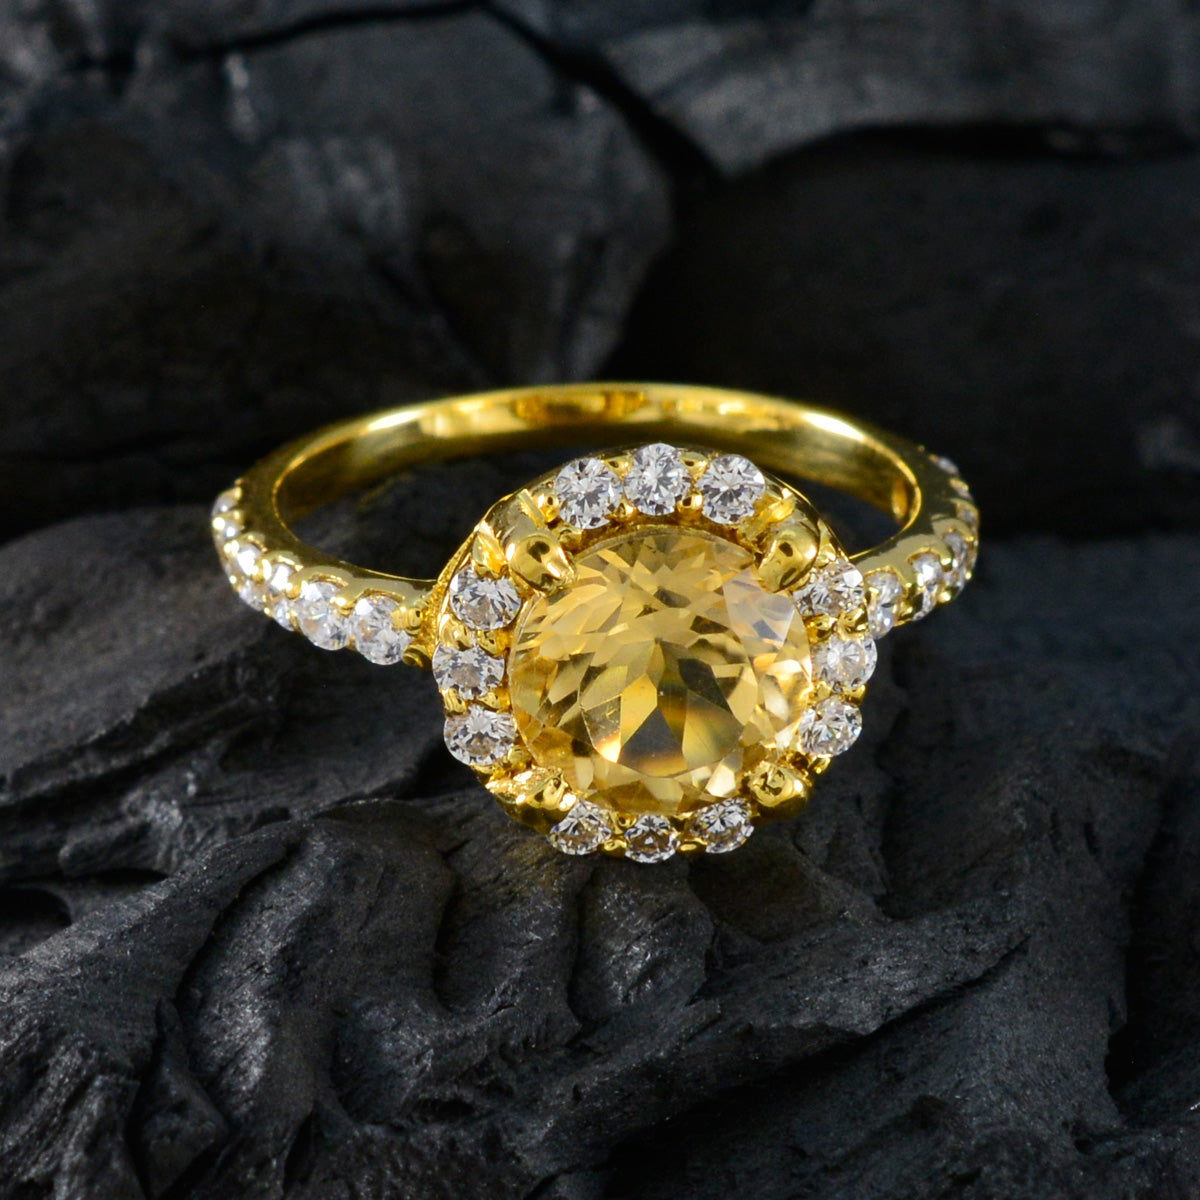 Riyo Bulk Silver Ring With Yellow Gold Plating Citrine Stone Oval Shape Prong Setting Stylish Jewelry Christmas Ring